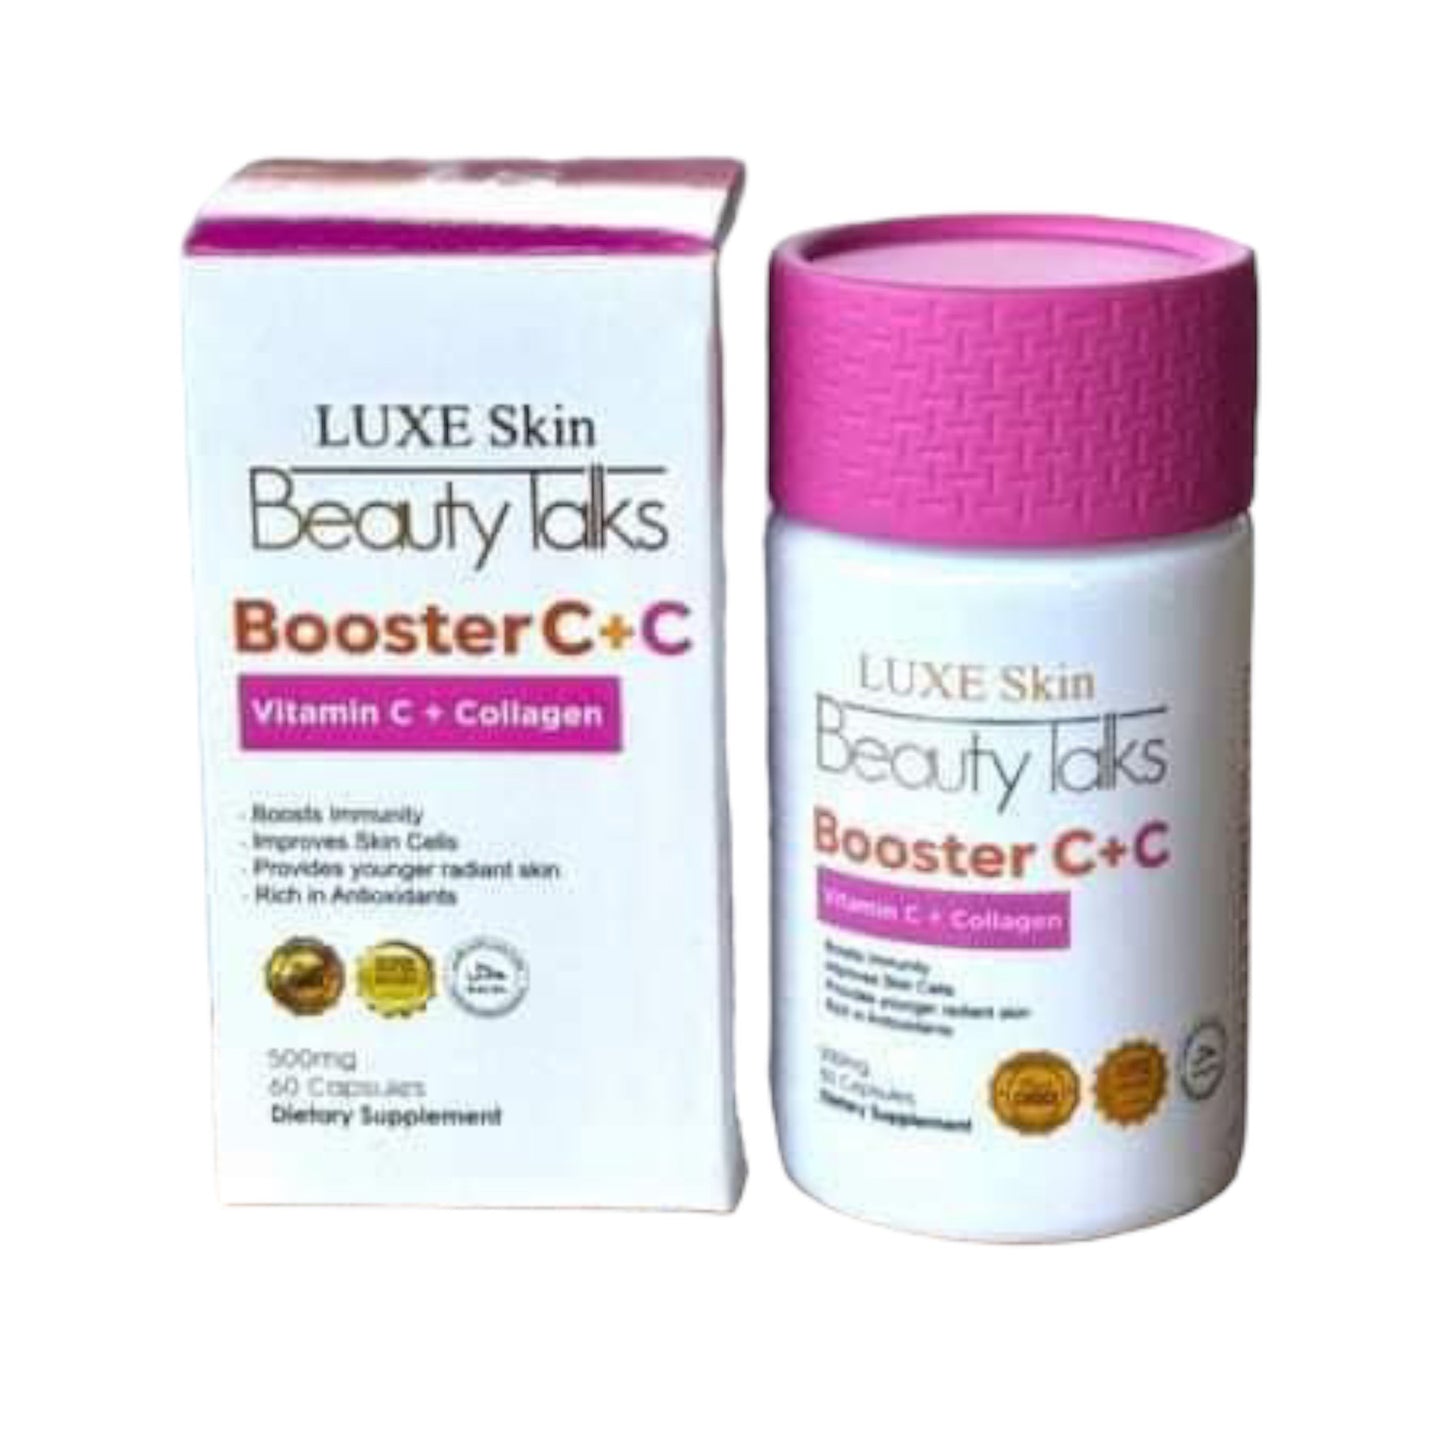 Luxe Skin -Beauty Talks Booster C+C | Vitamin C Collagen 60 Capsules (Pink Caps)